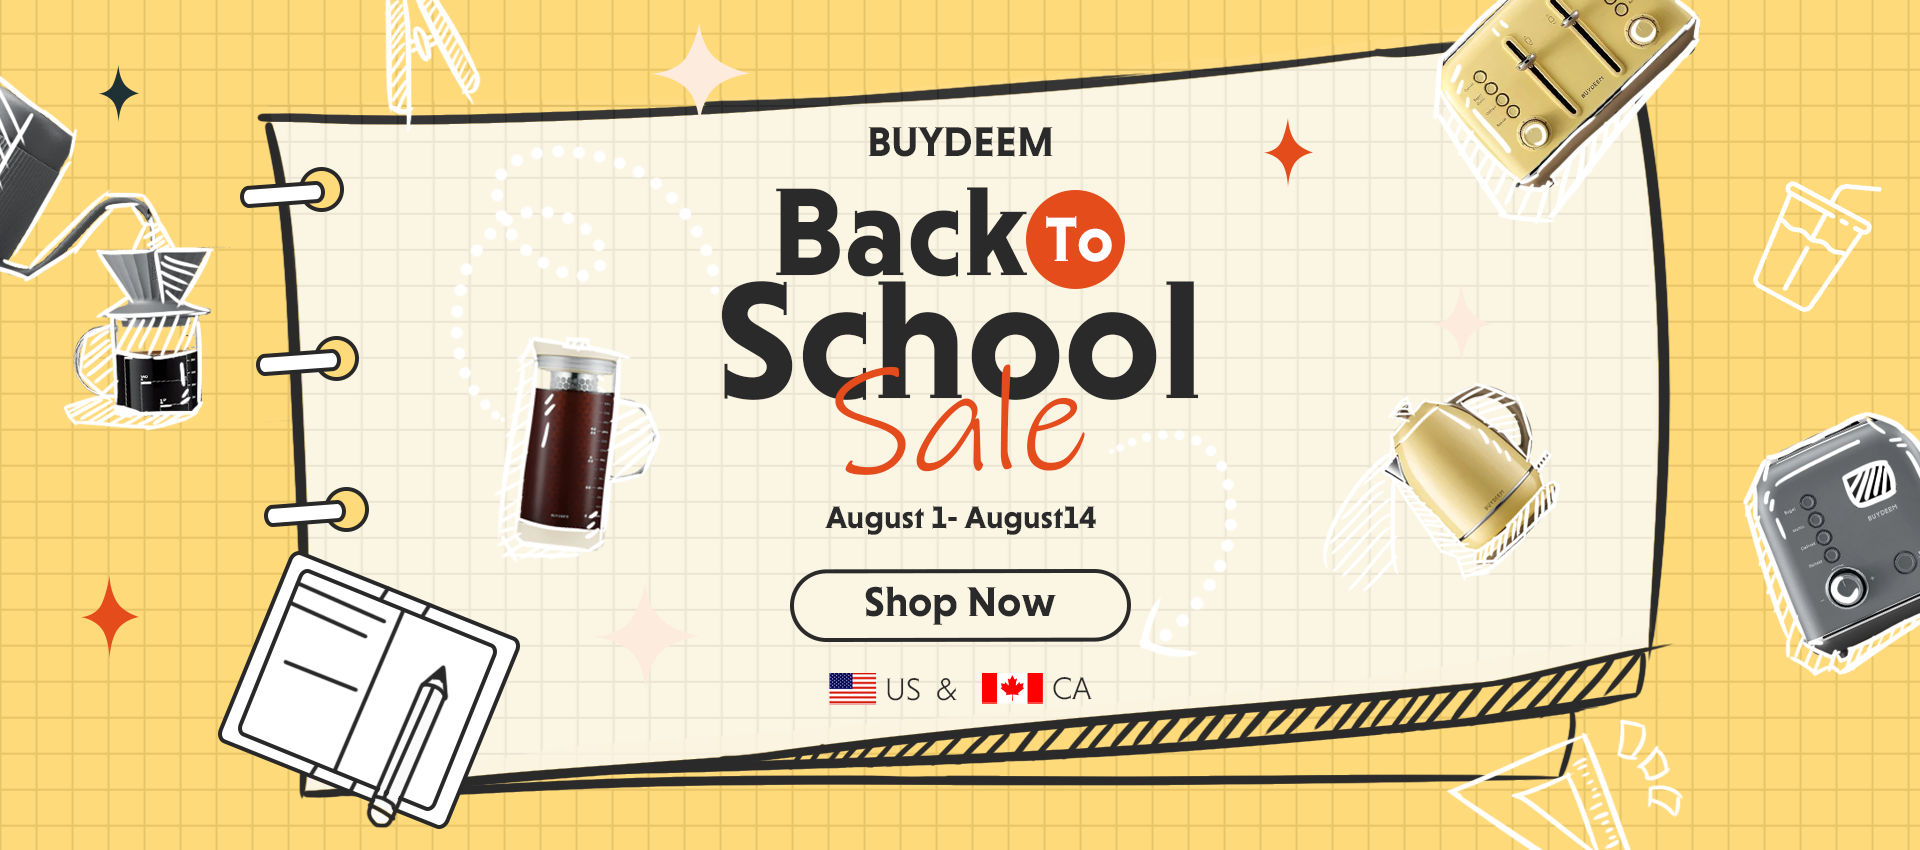 BUYDEEM Back To School Sale